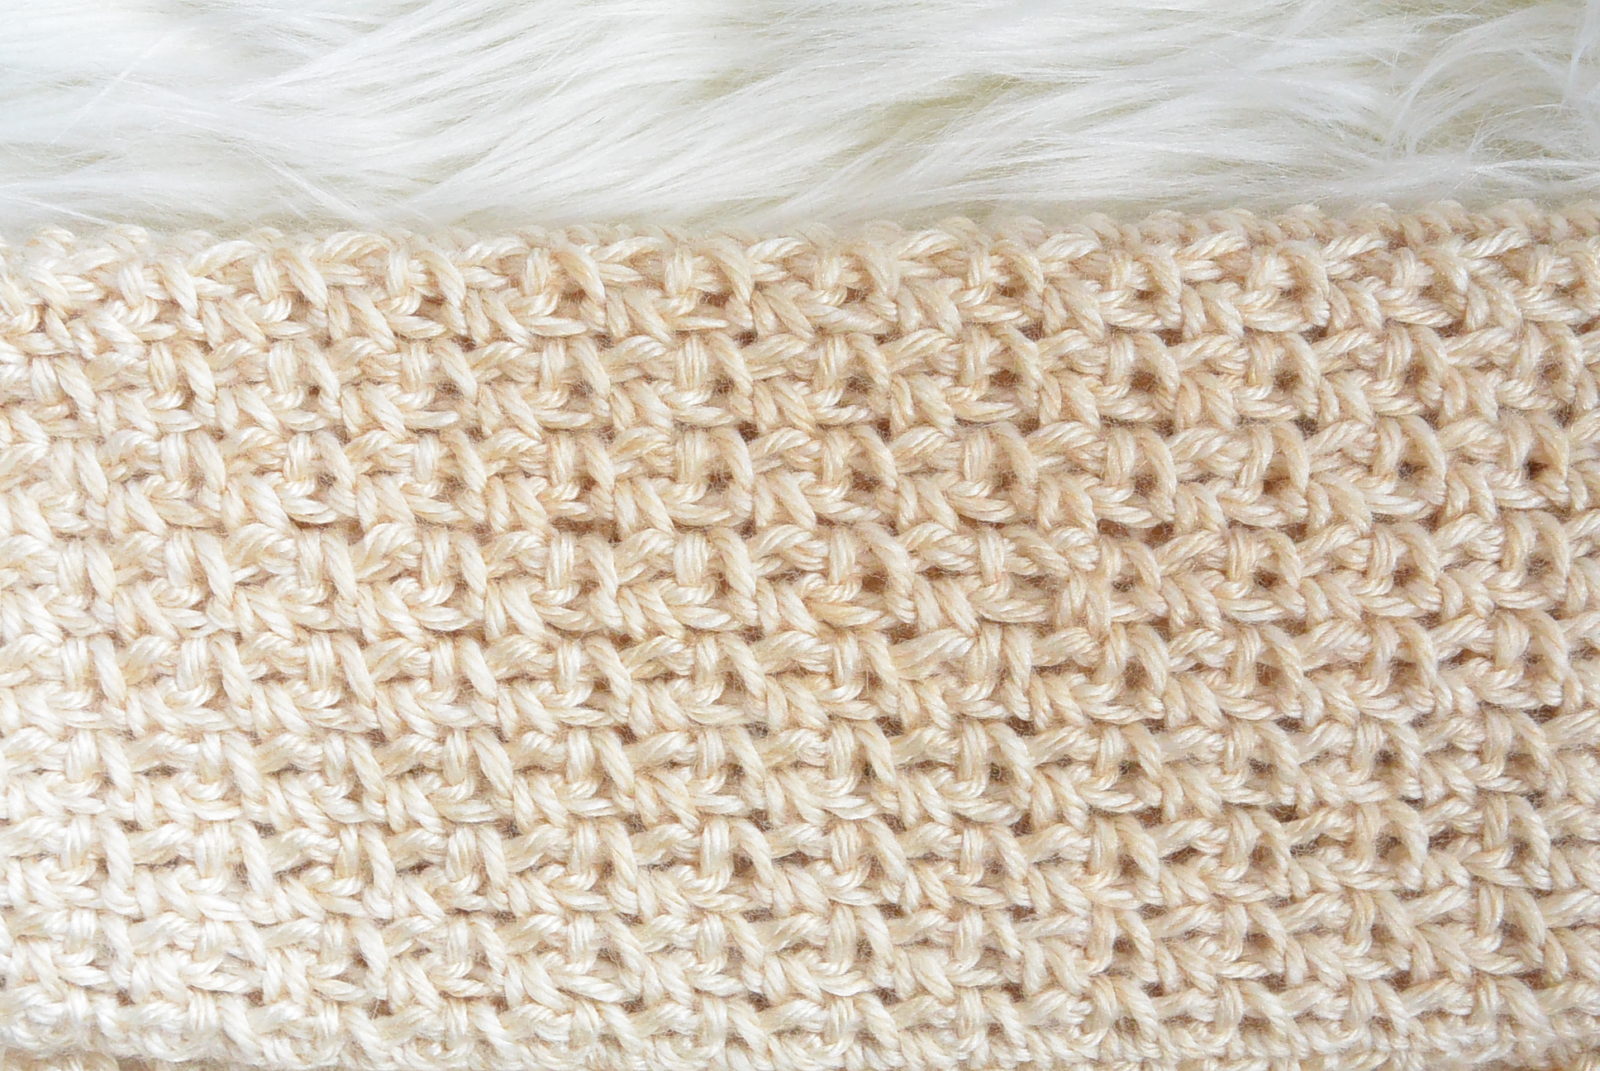 moss crochet stitch directions